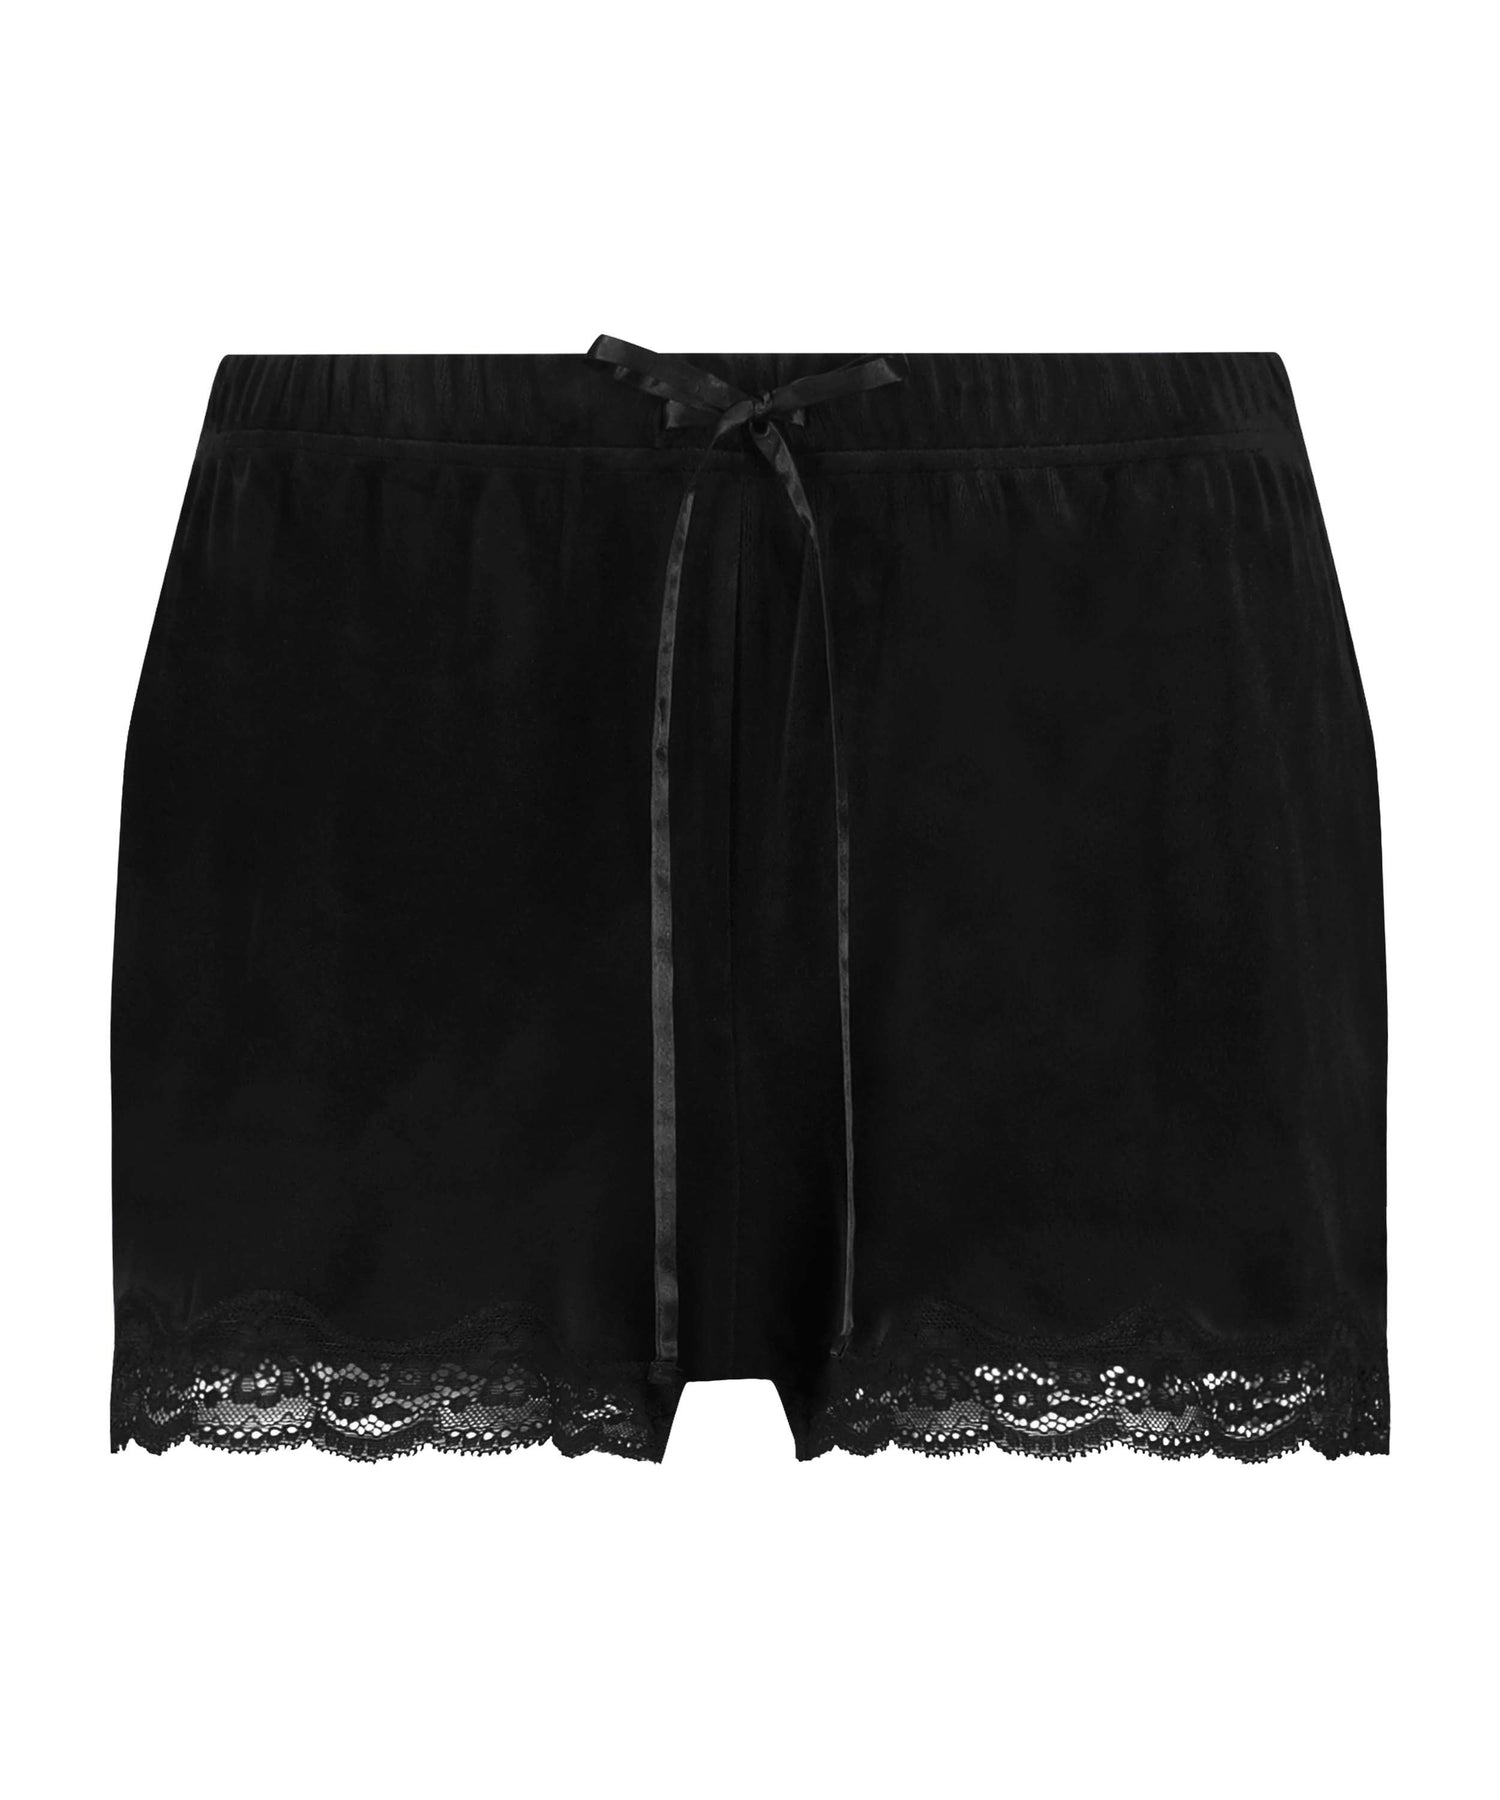 Velours Scallop Lace Shorts_169177_Black_04